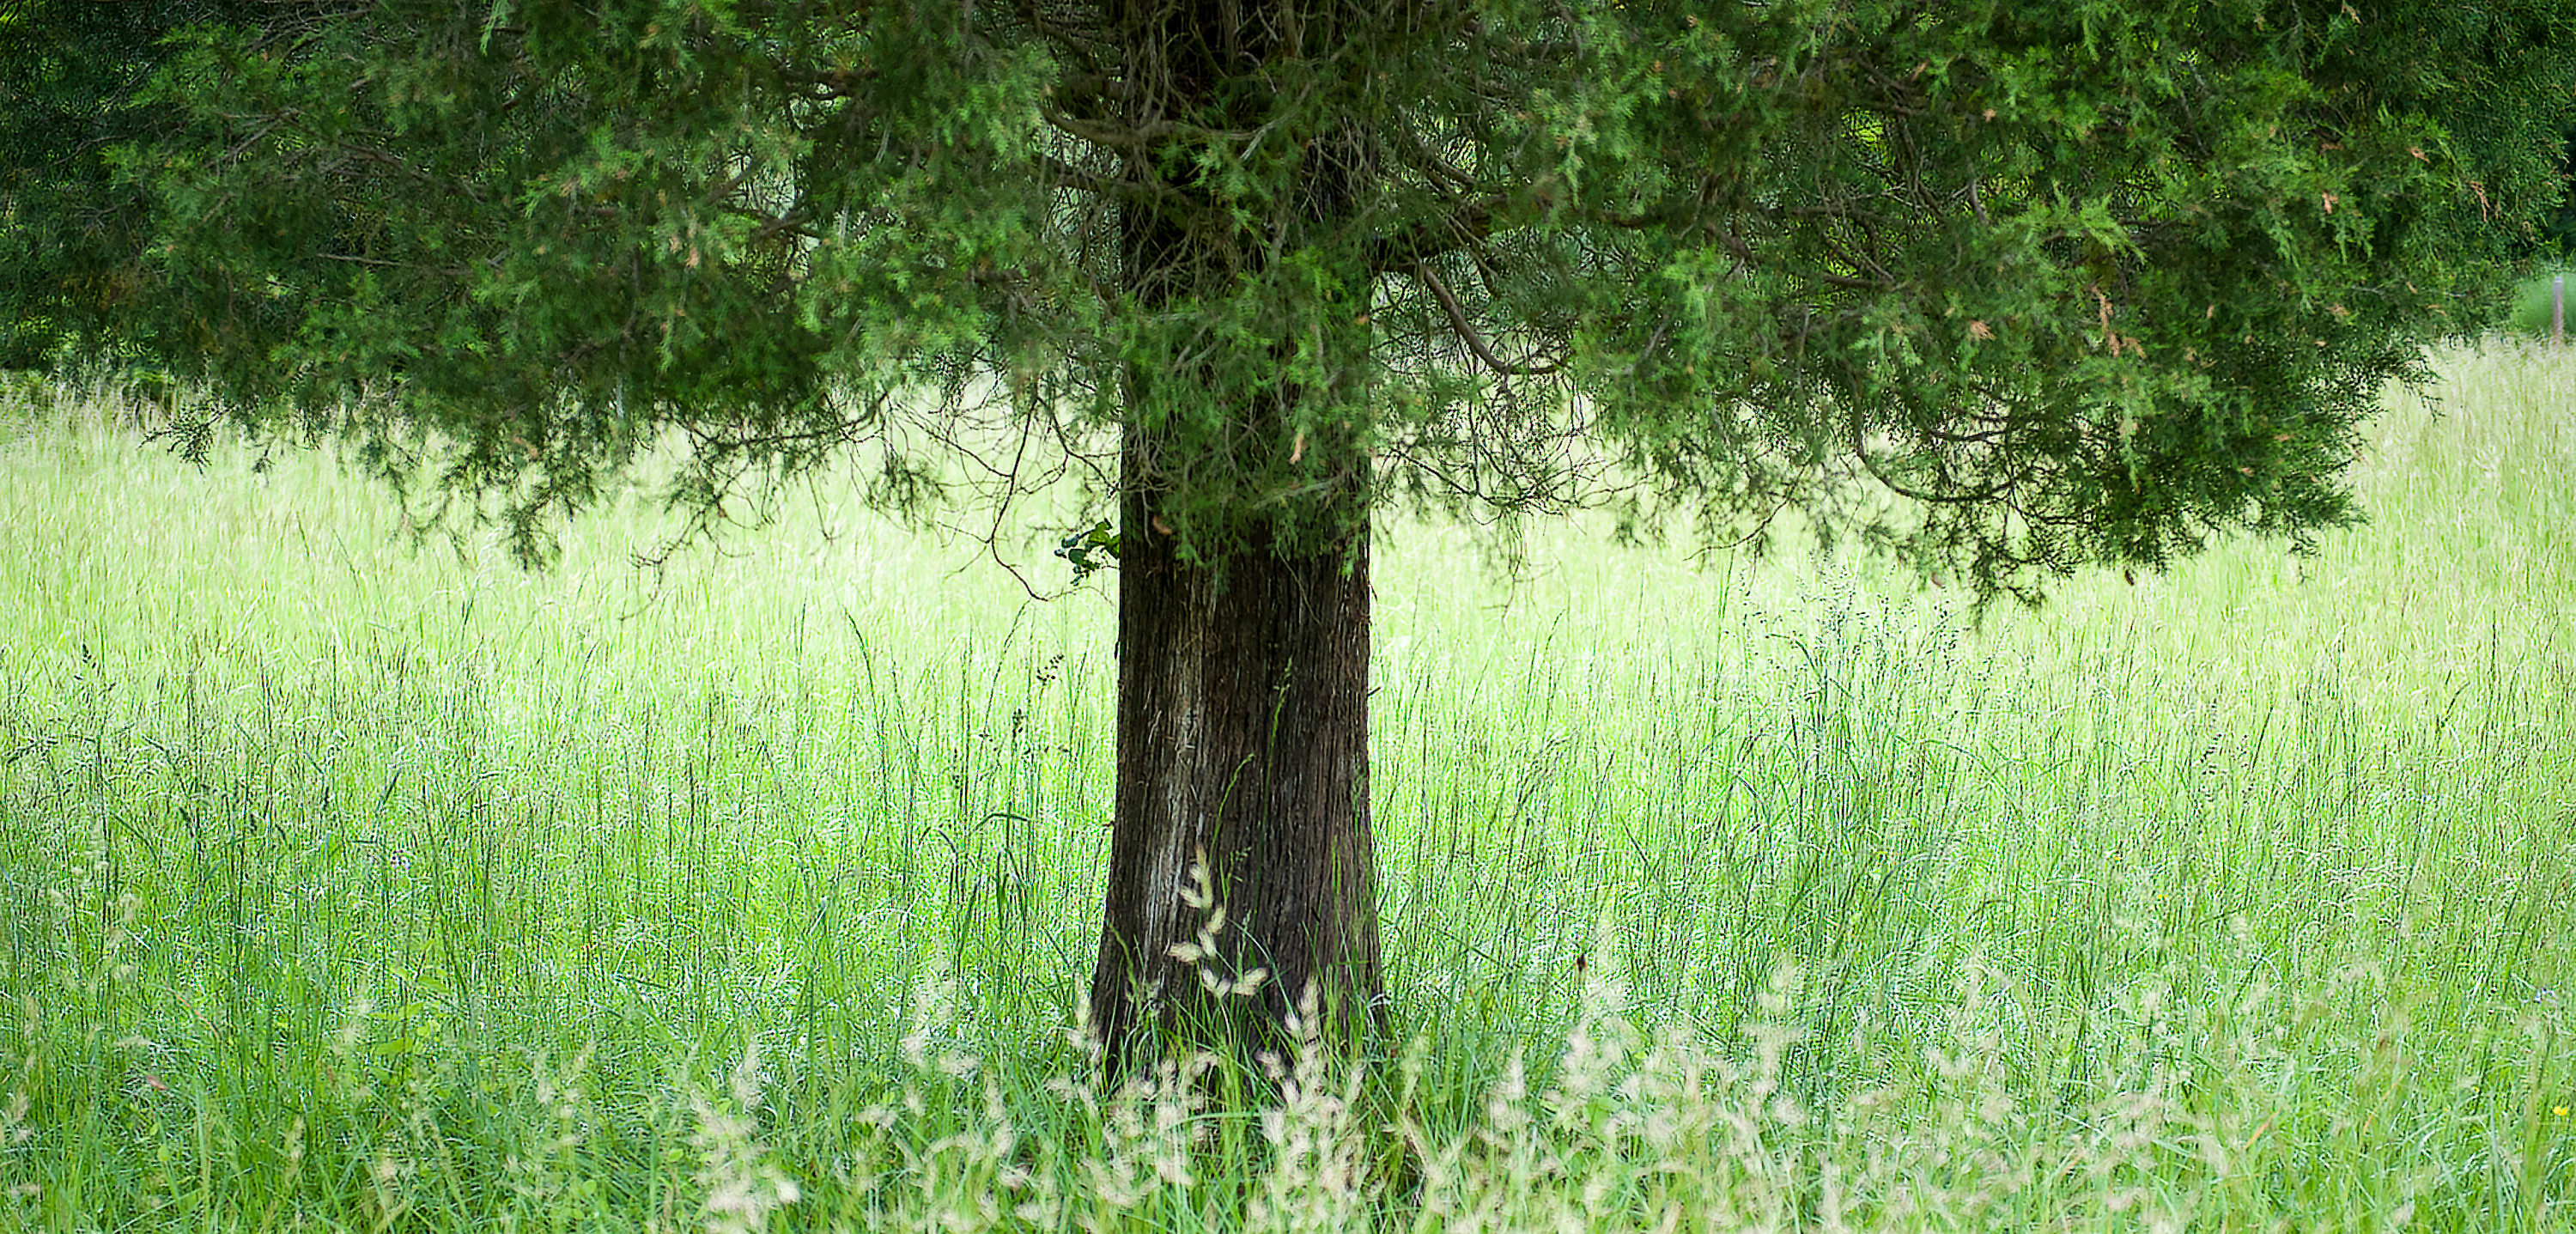 Tree and grass, Hillsborough, North Carolina (2011)